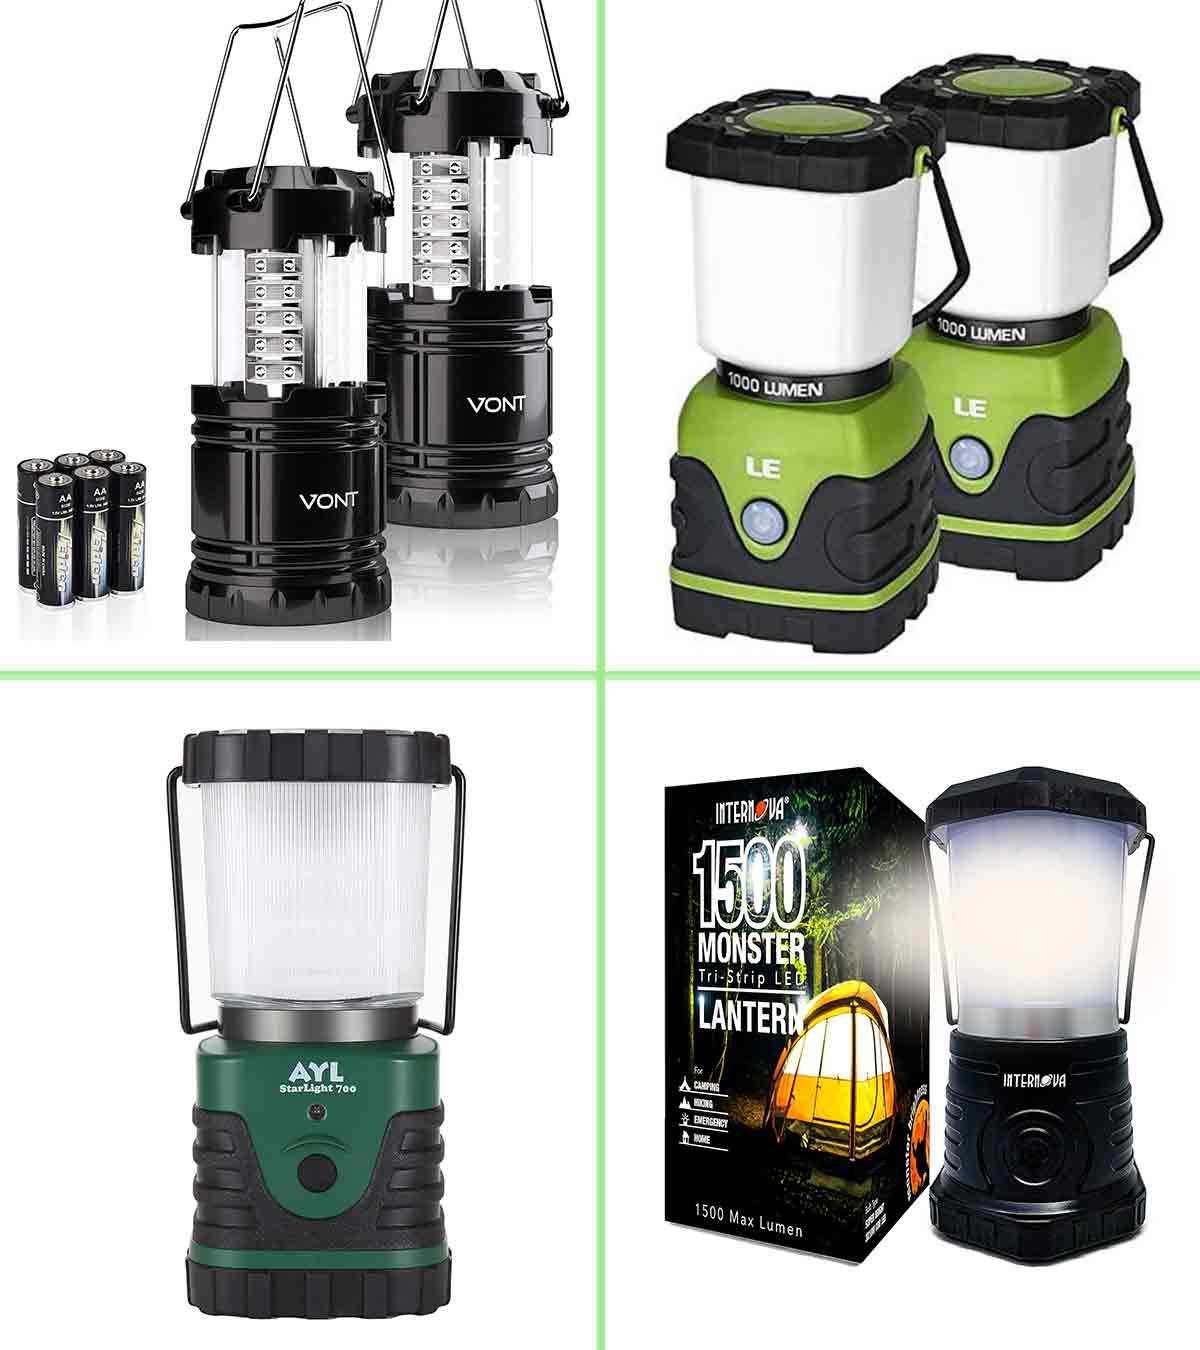 https://www.momjunction.com/wp-content/uploads/2020/06/11-Best-Lanterns-For-Power-Outage.jpg